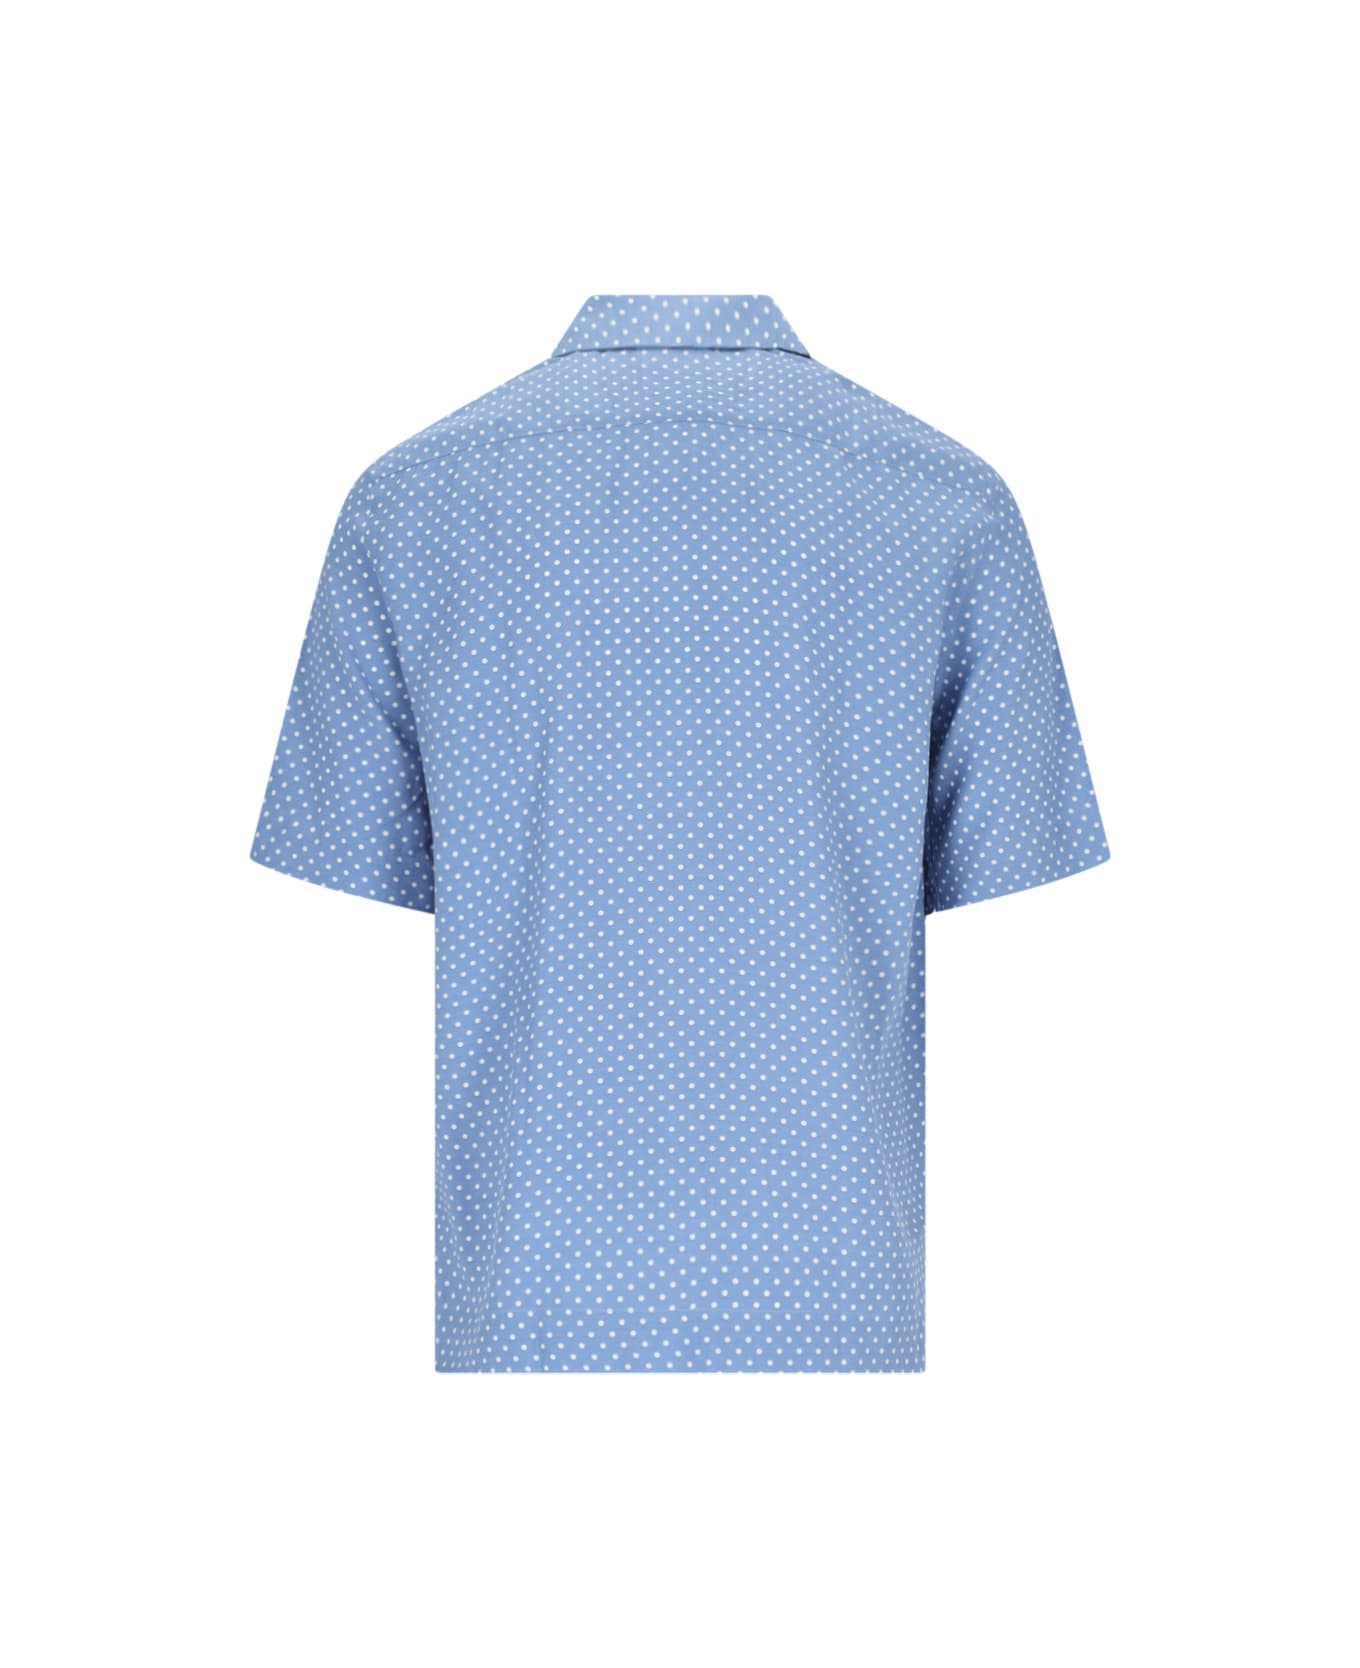 Paul Smith Polka Dot Shirt - Light Blue